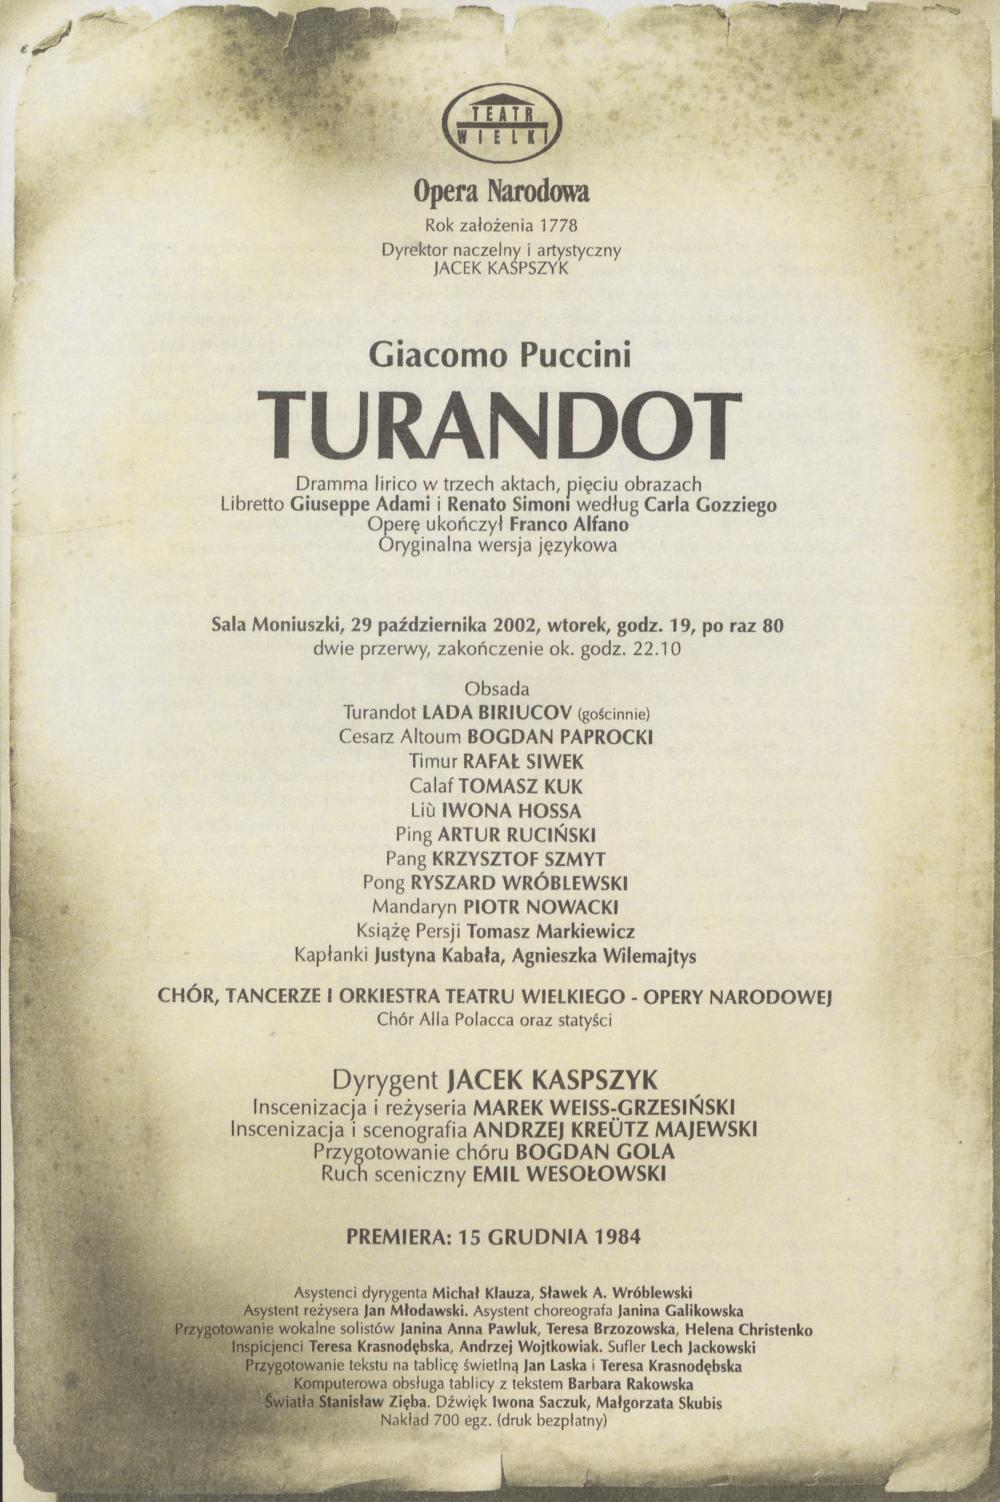 Wkładka obsadowa „Turandot” Giacomo Puccini 29-10-2002